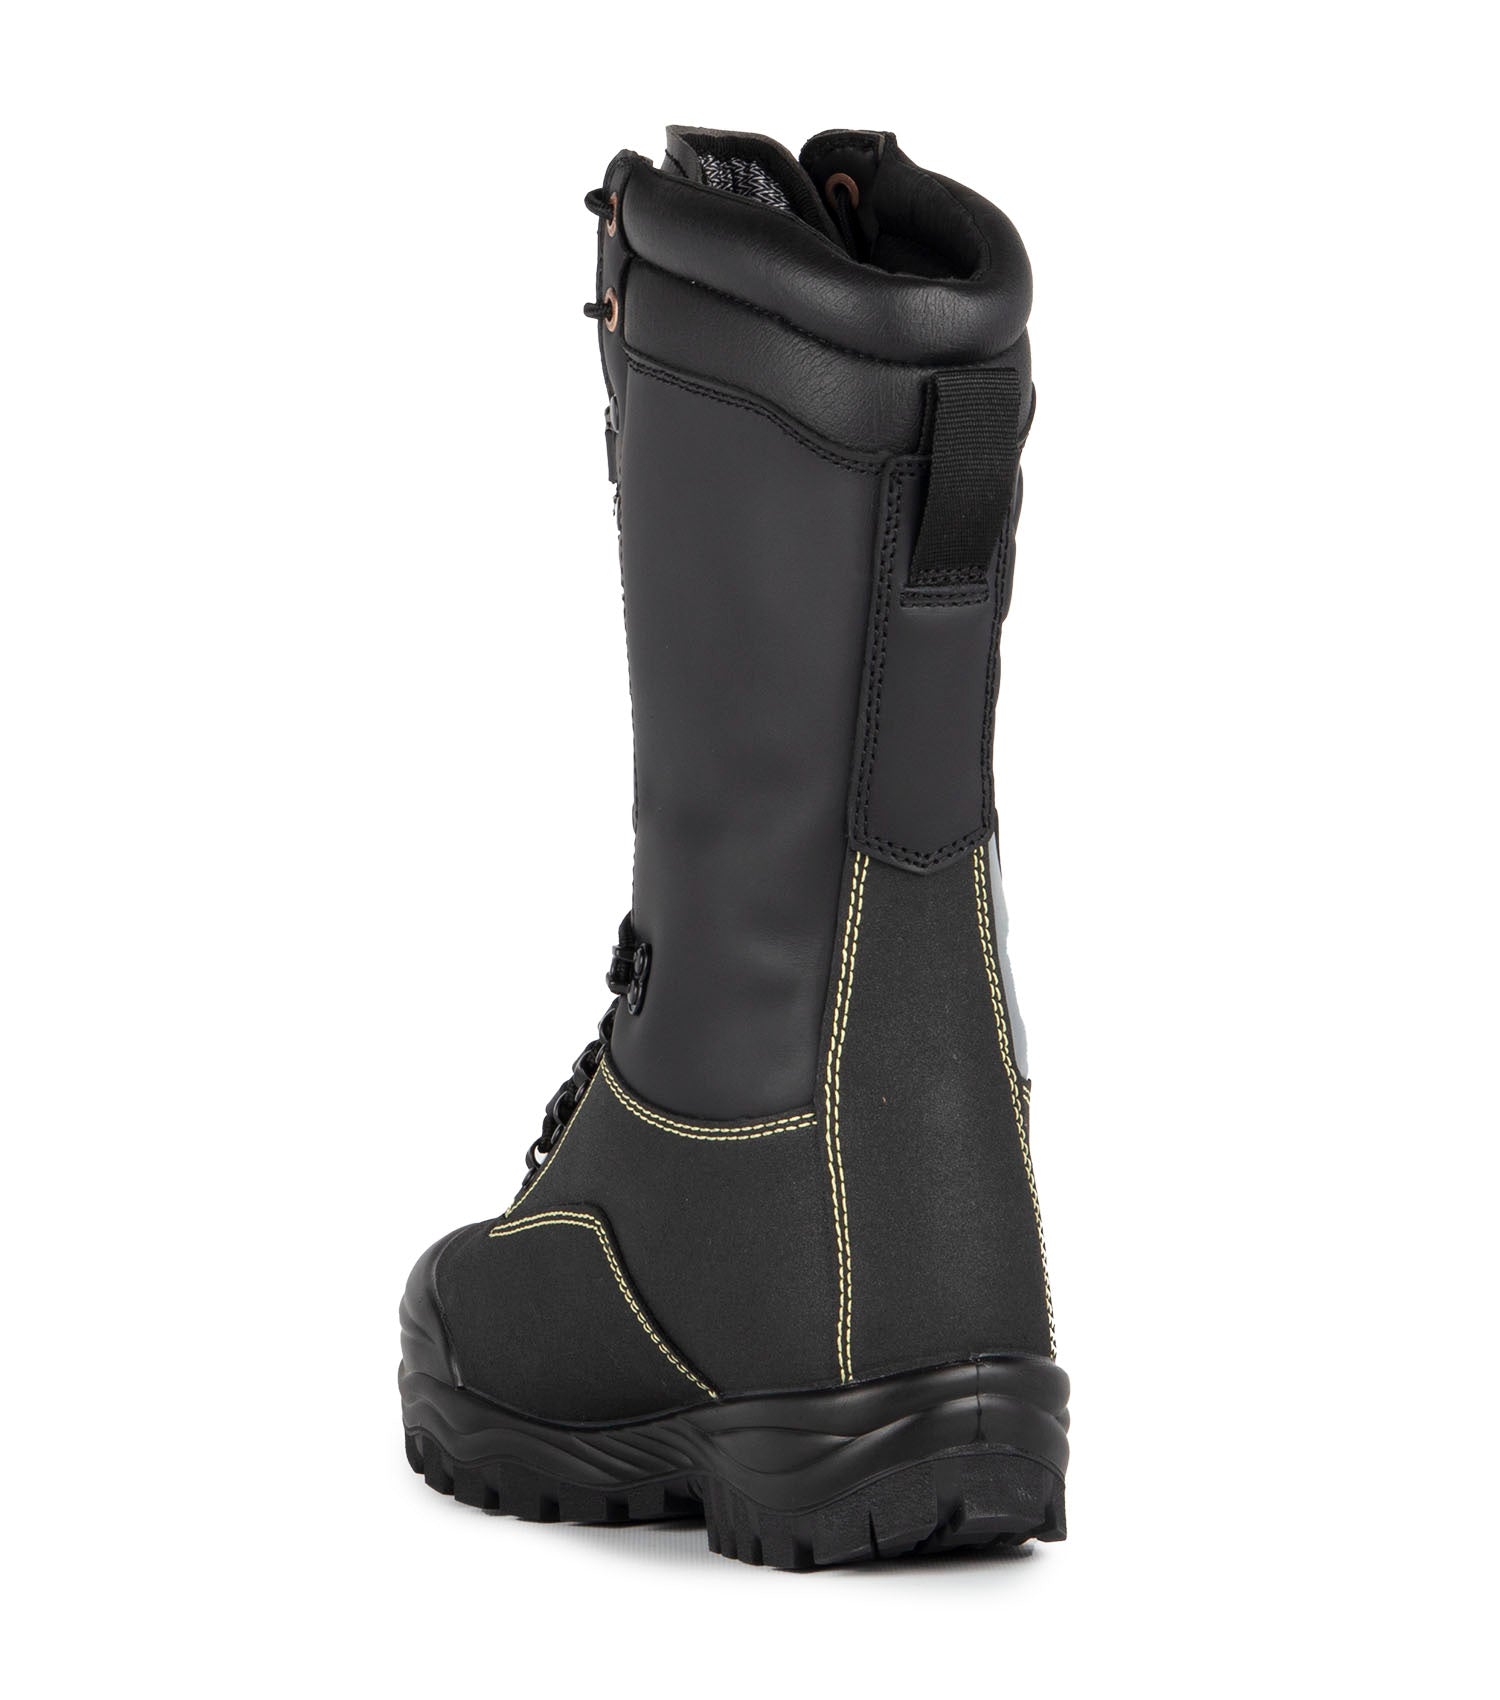 Granite, Black | 14' Mining Boots | Flexible Metguard Protection